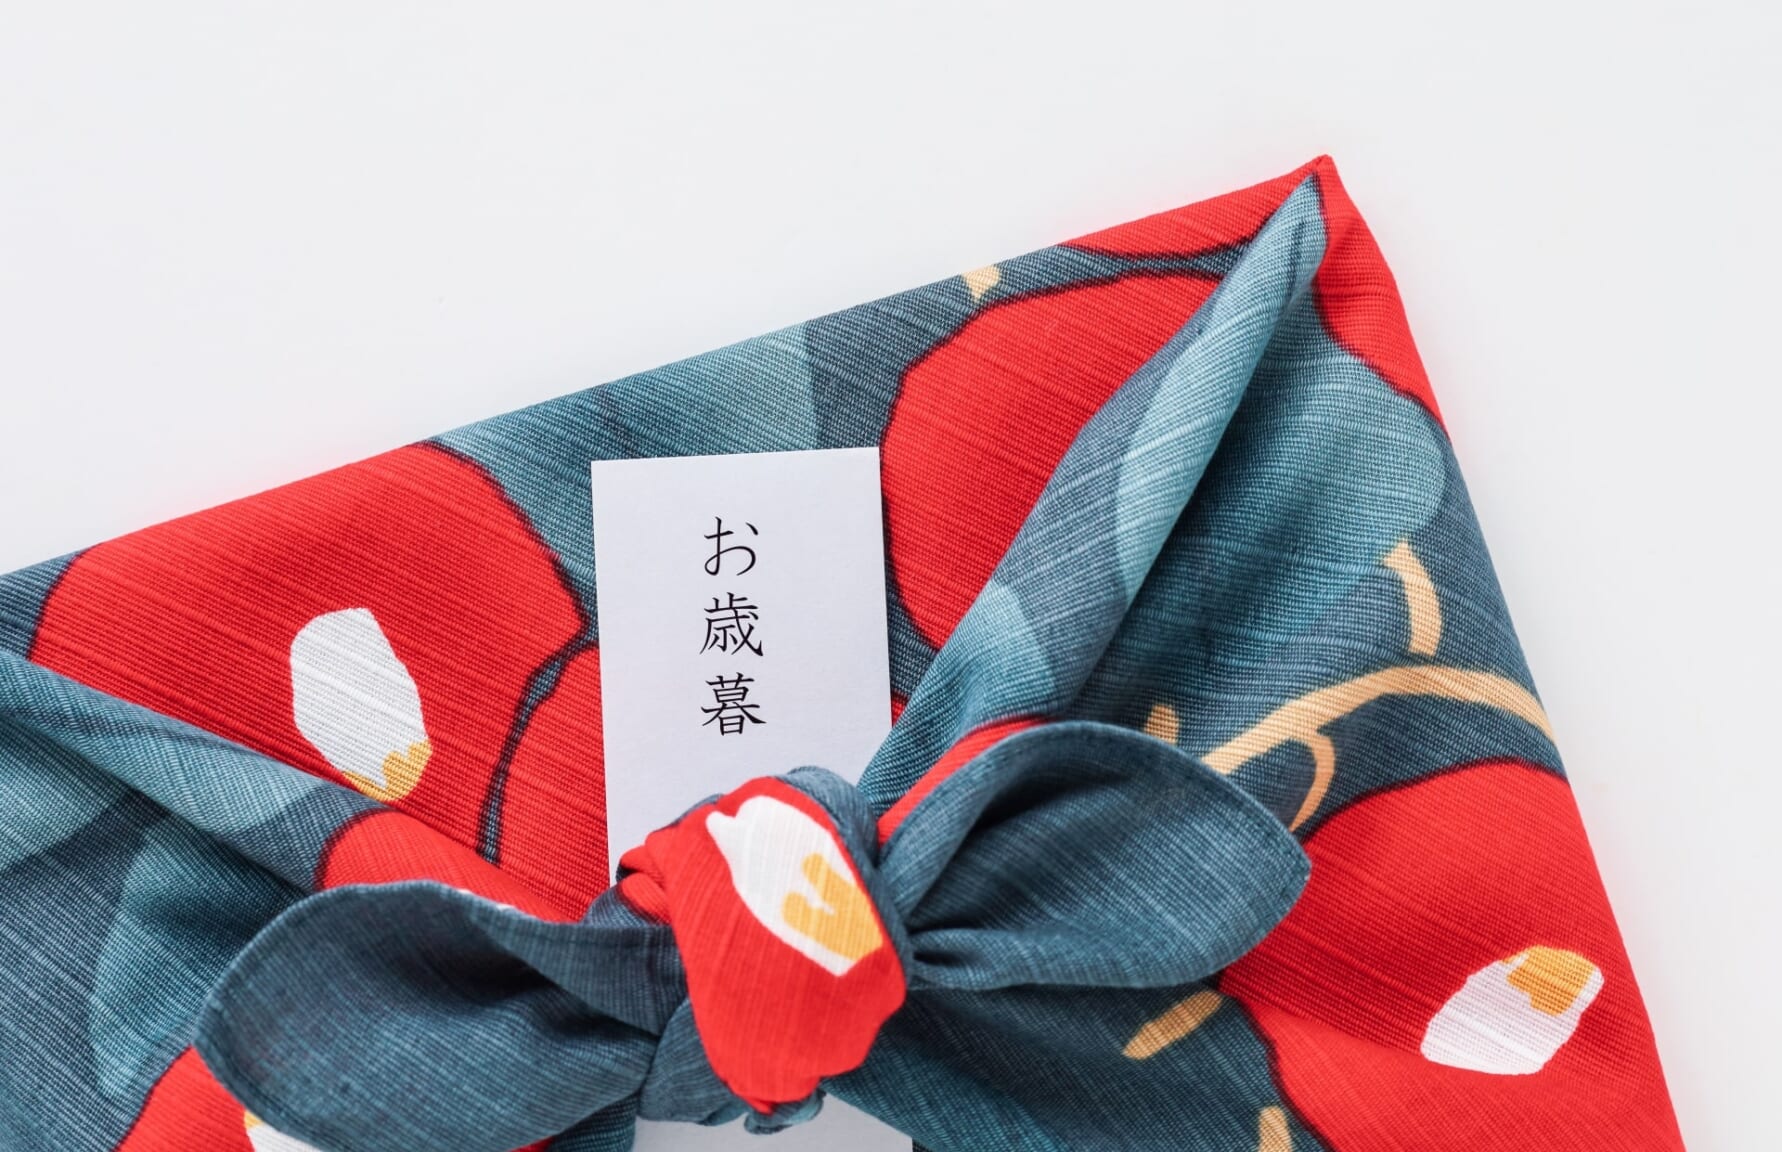 Furoshiki wrapping